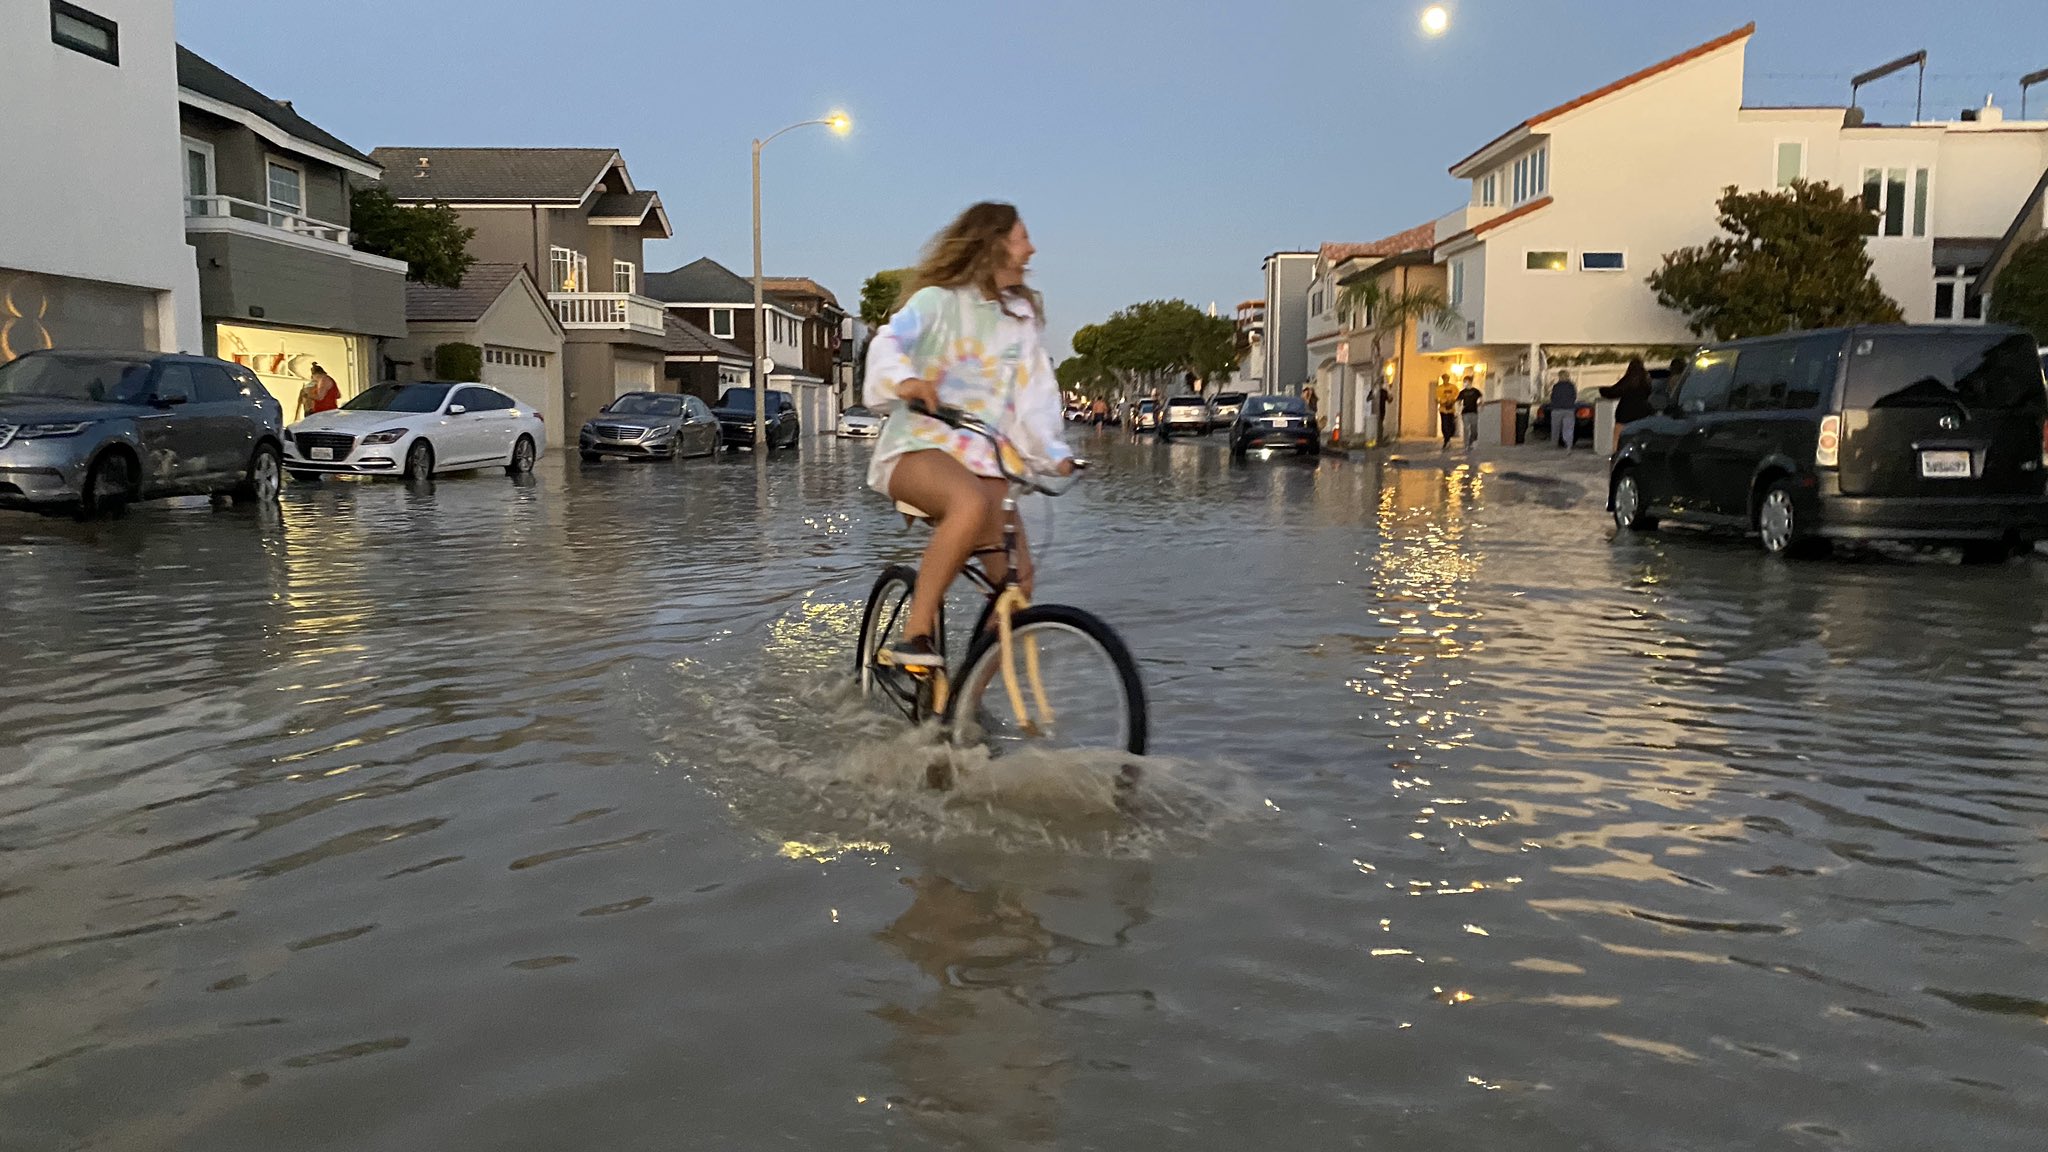 Higher, wider berm stops flooding in Newport Beach on Saturday night